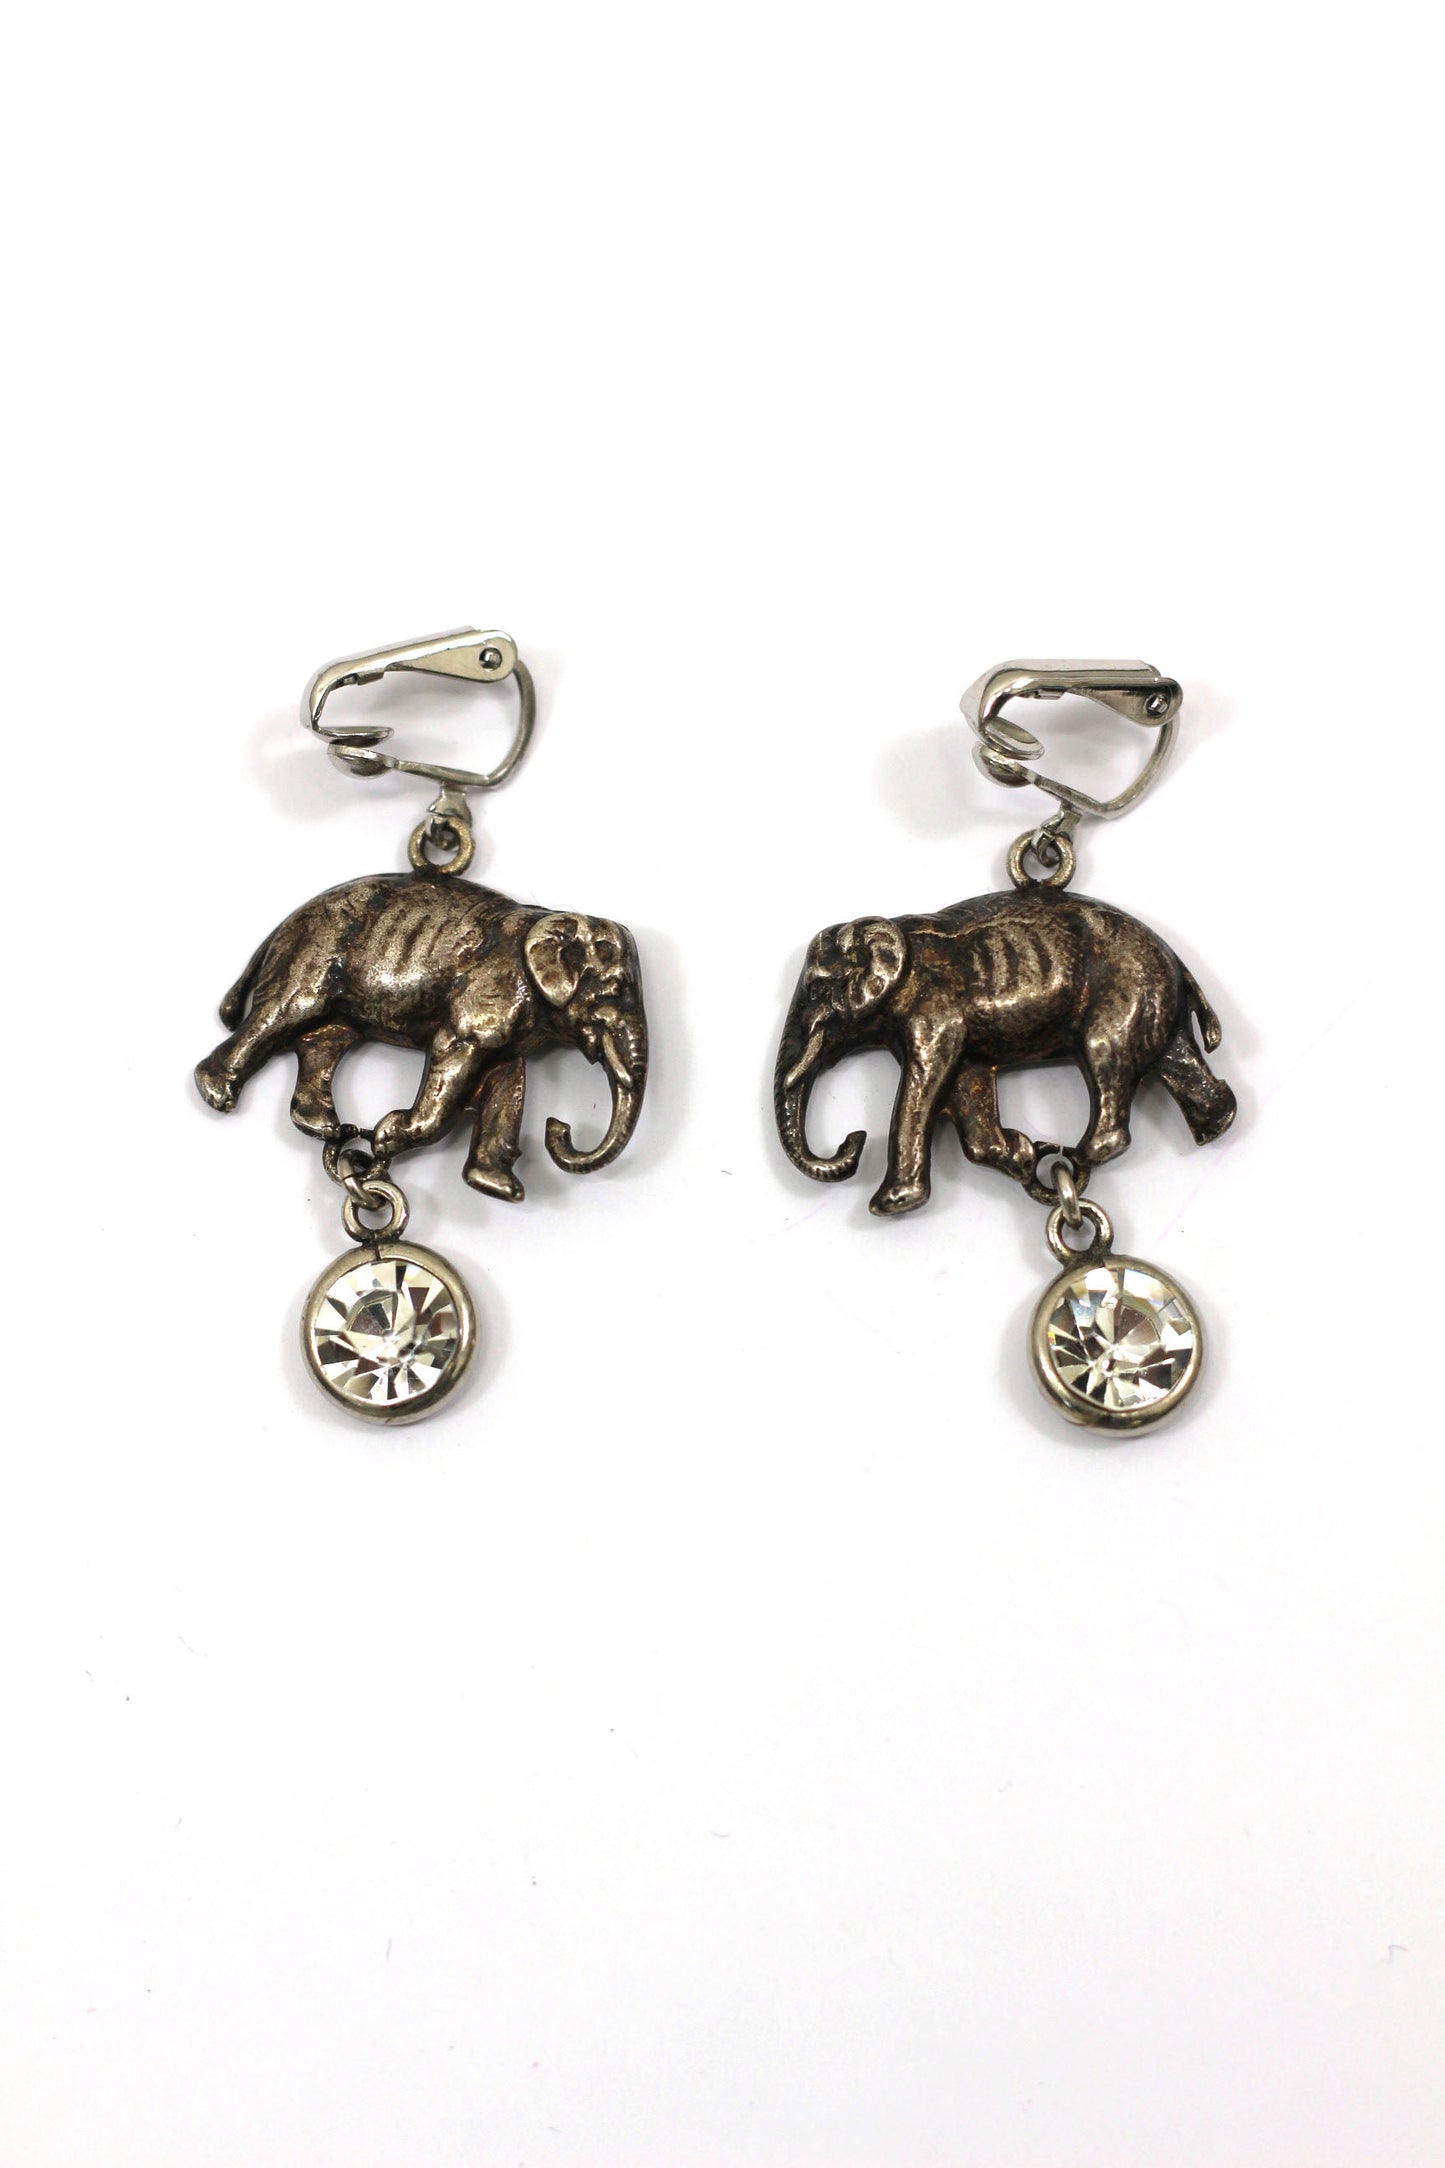 Vintage  elephant earrings サーカスの主役